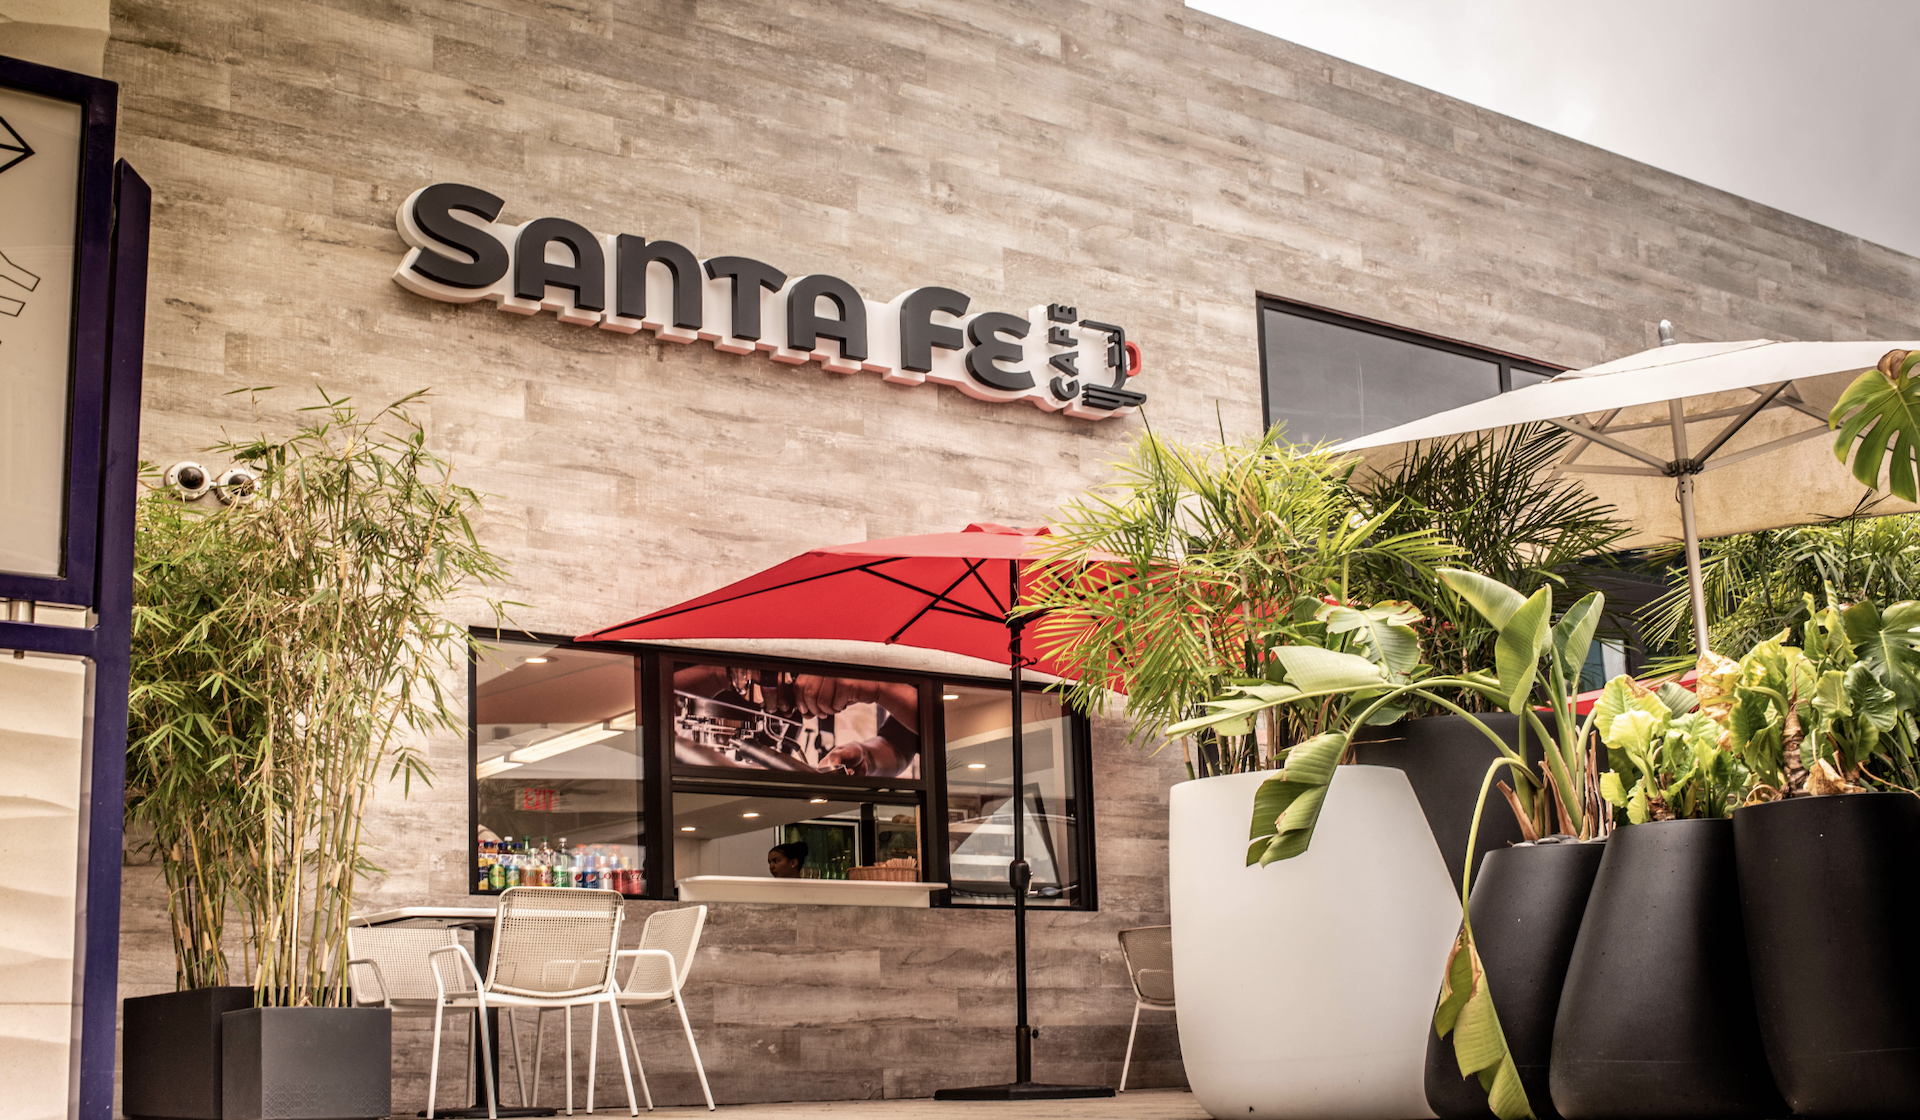 Santa Fe Cafe Image